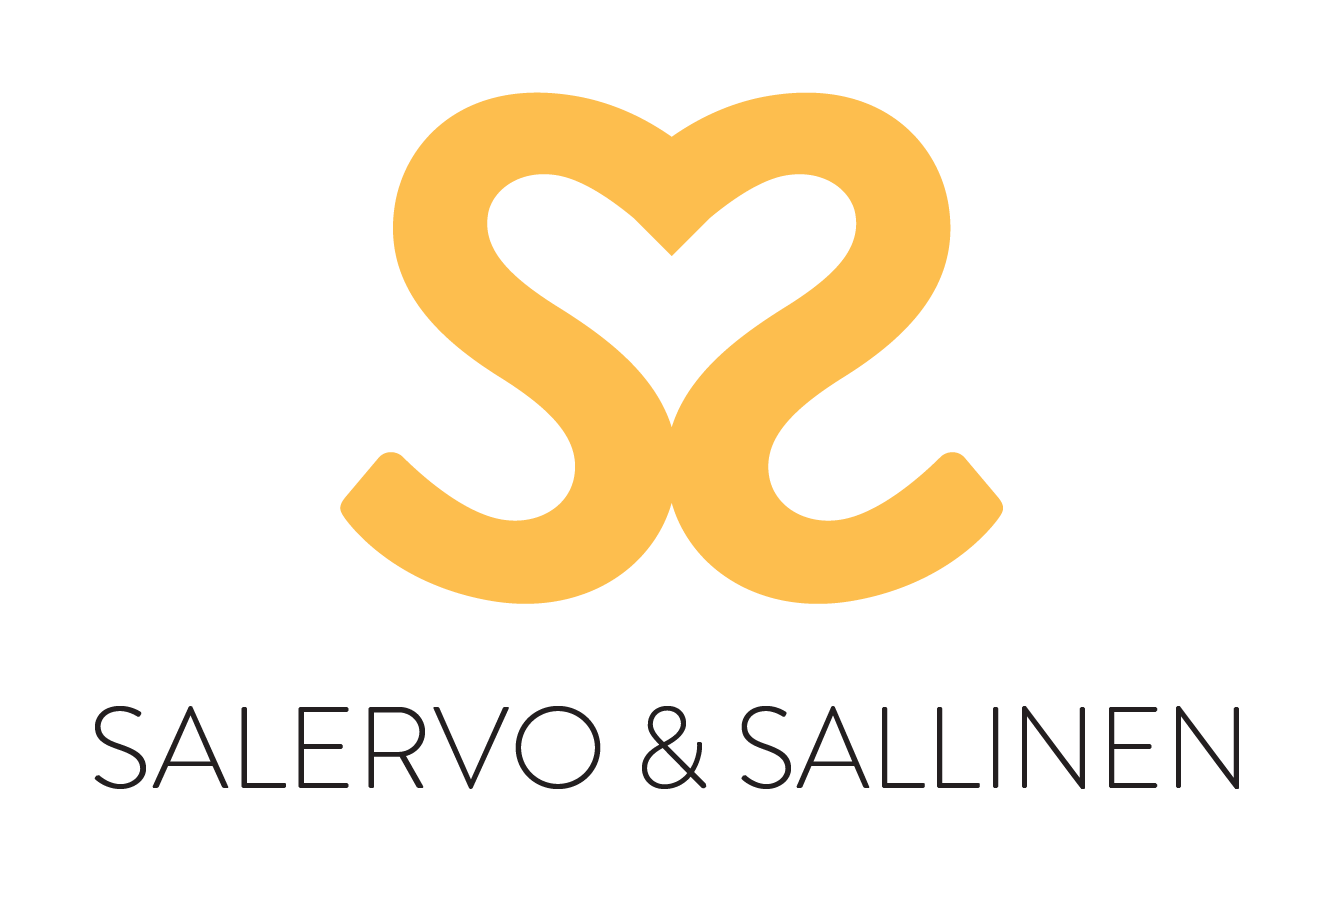 Salervo & Sallinen